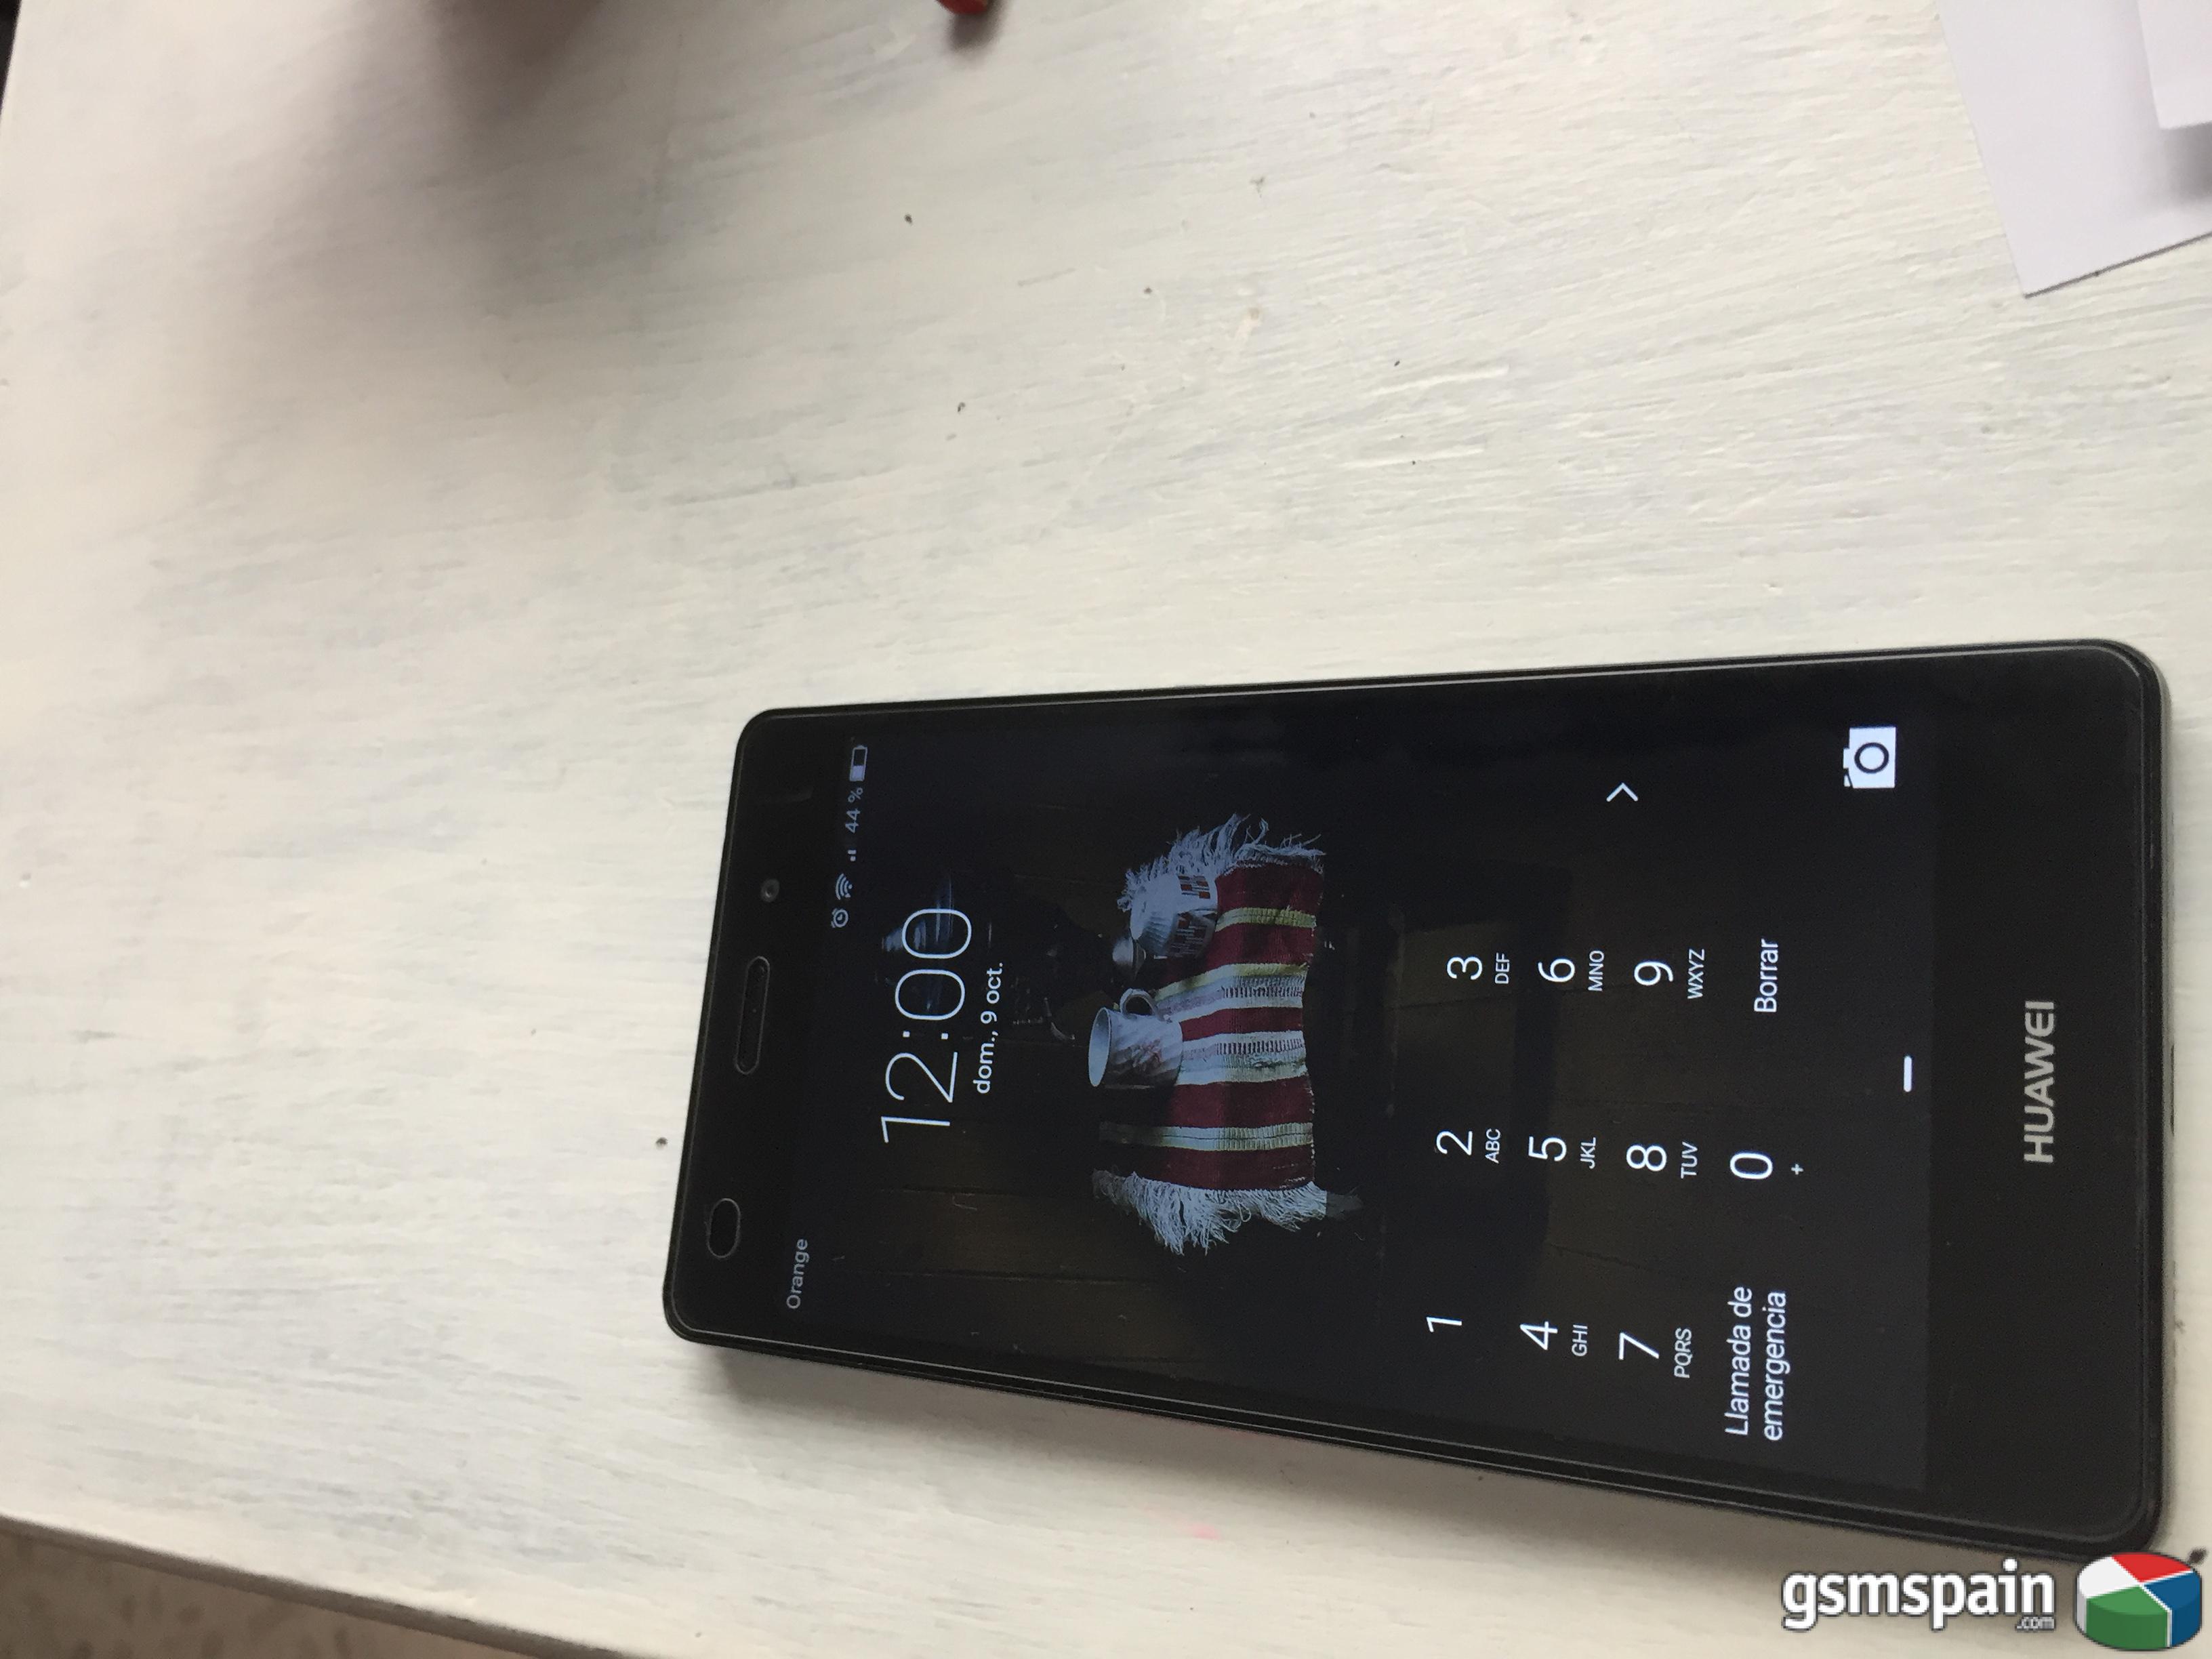 [VENDO] Oferton!!!  Huawei p8 lite 100 euros color negro